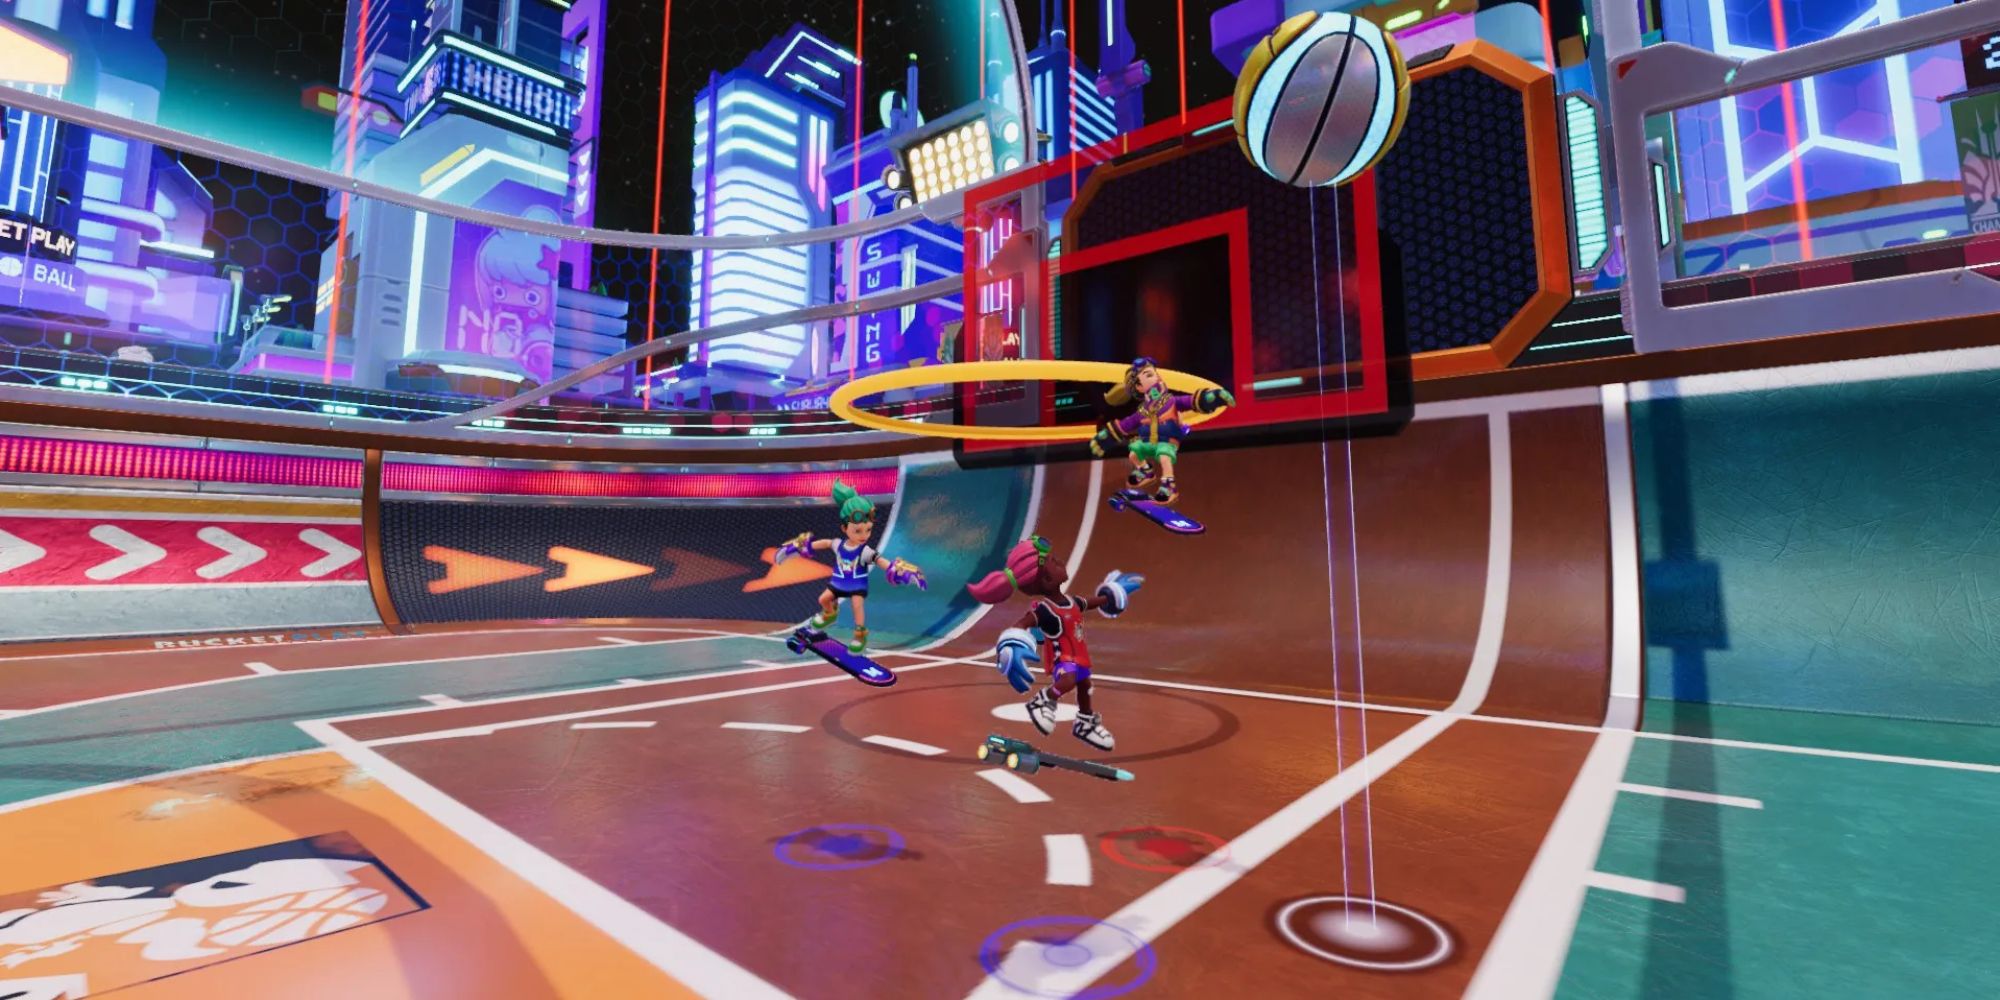 Metaball Screenshot Of Three Players Next To An Air Ball